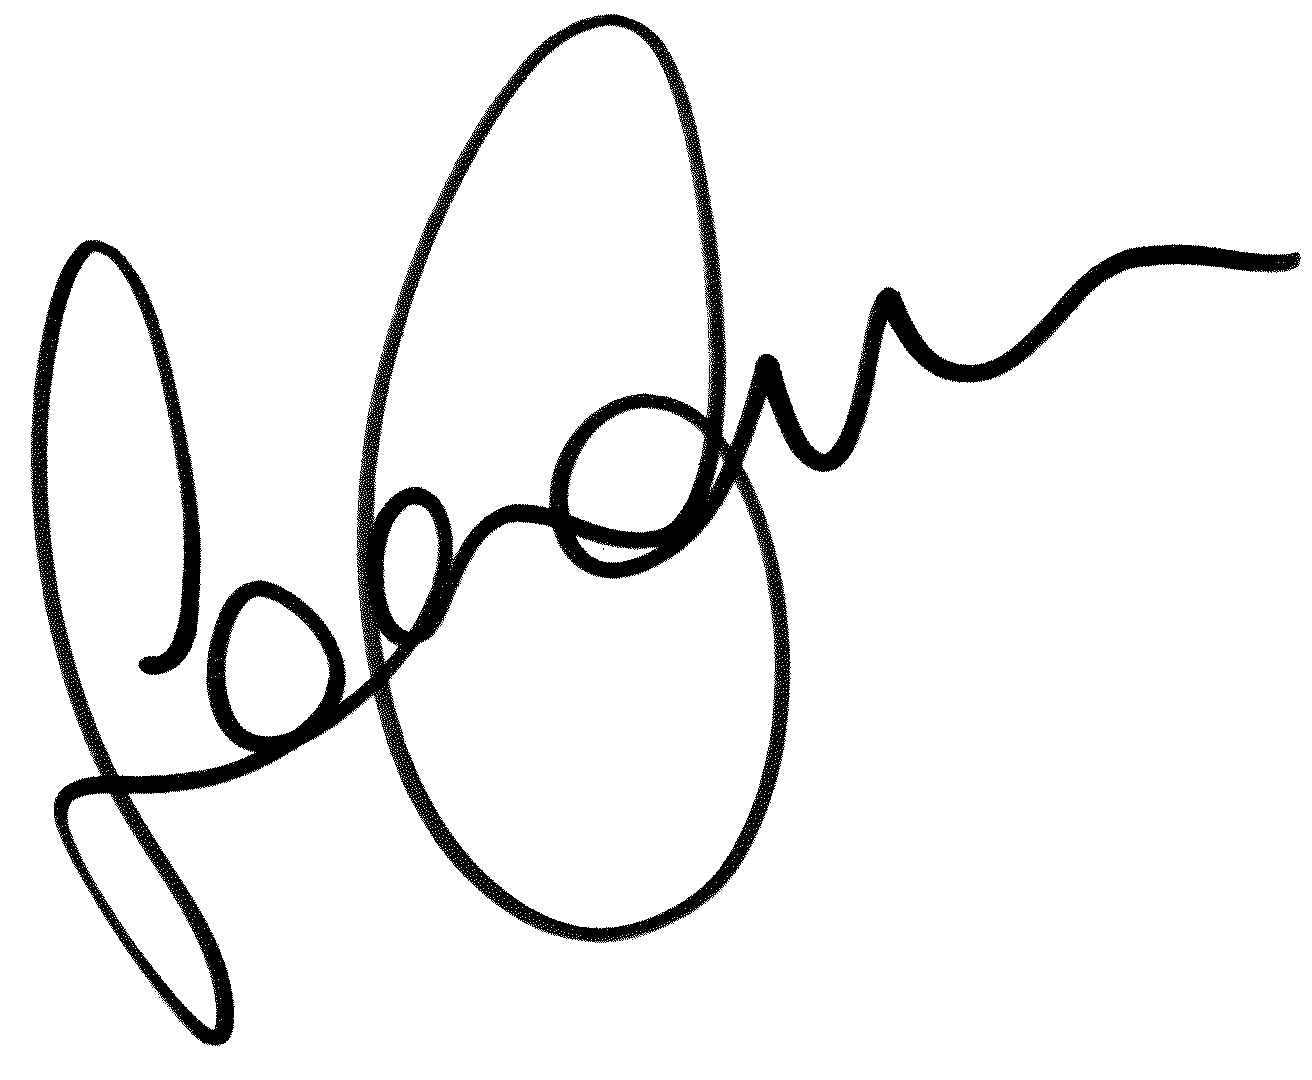 Sean Lennon autograph facsimile